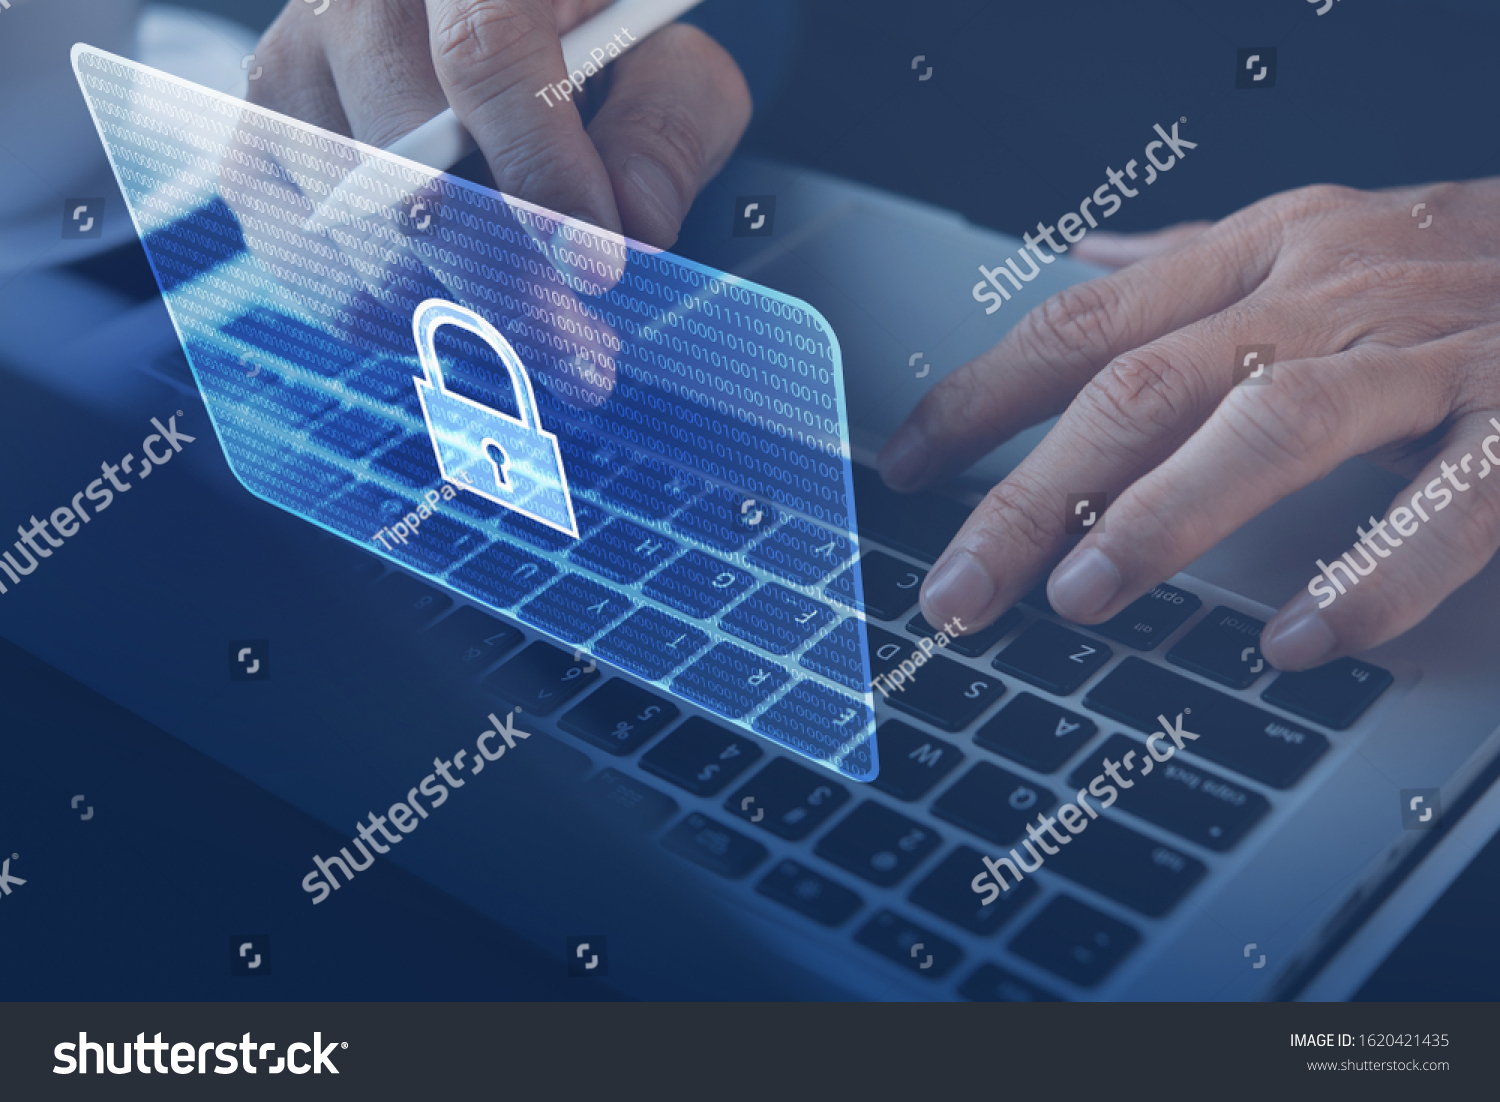 Cyber Security Protection Firewall Interface Concept. Software technology development, digital crime. Man working on laptop computer, antivirus alert, malware detected, Hacker hacking business data #1620421435